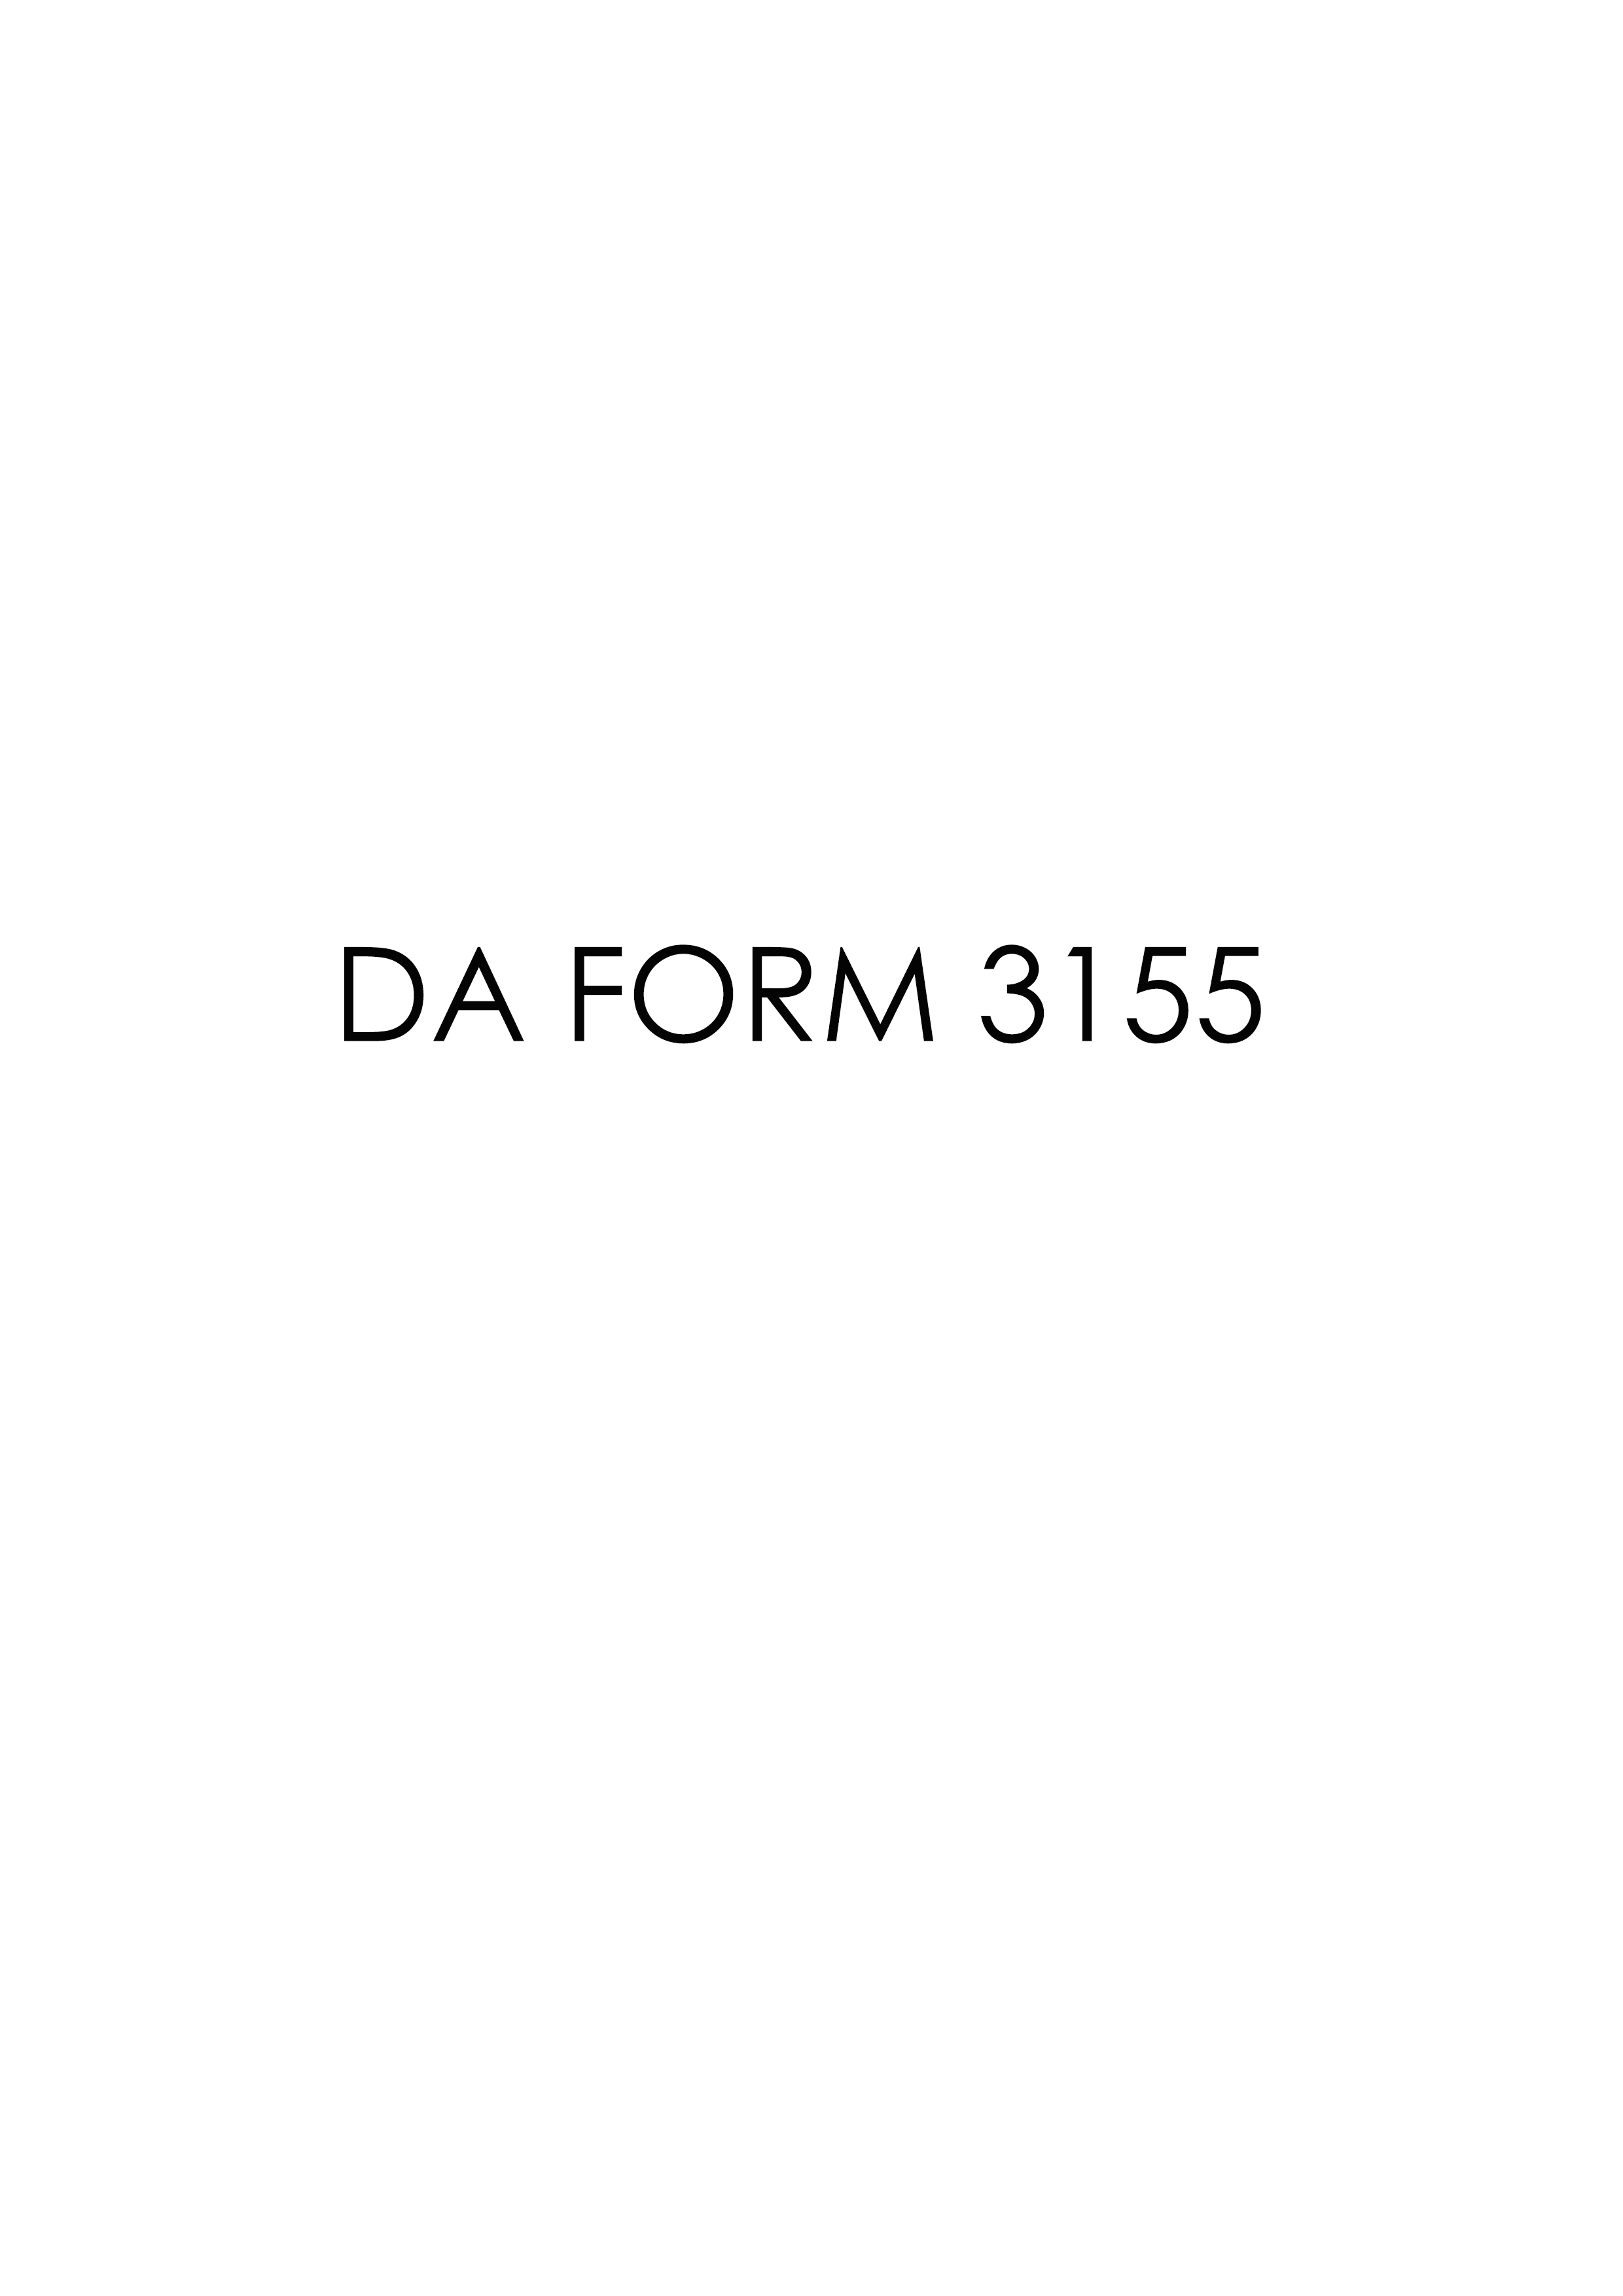 da Form 3155 fillable